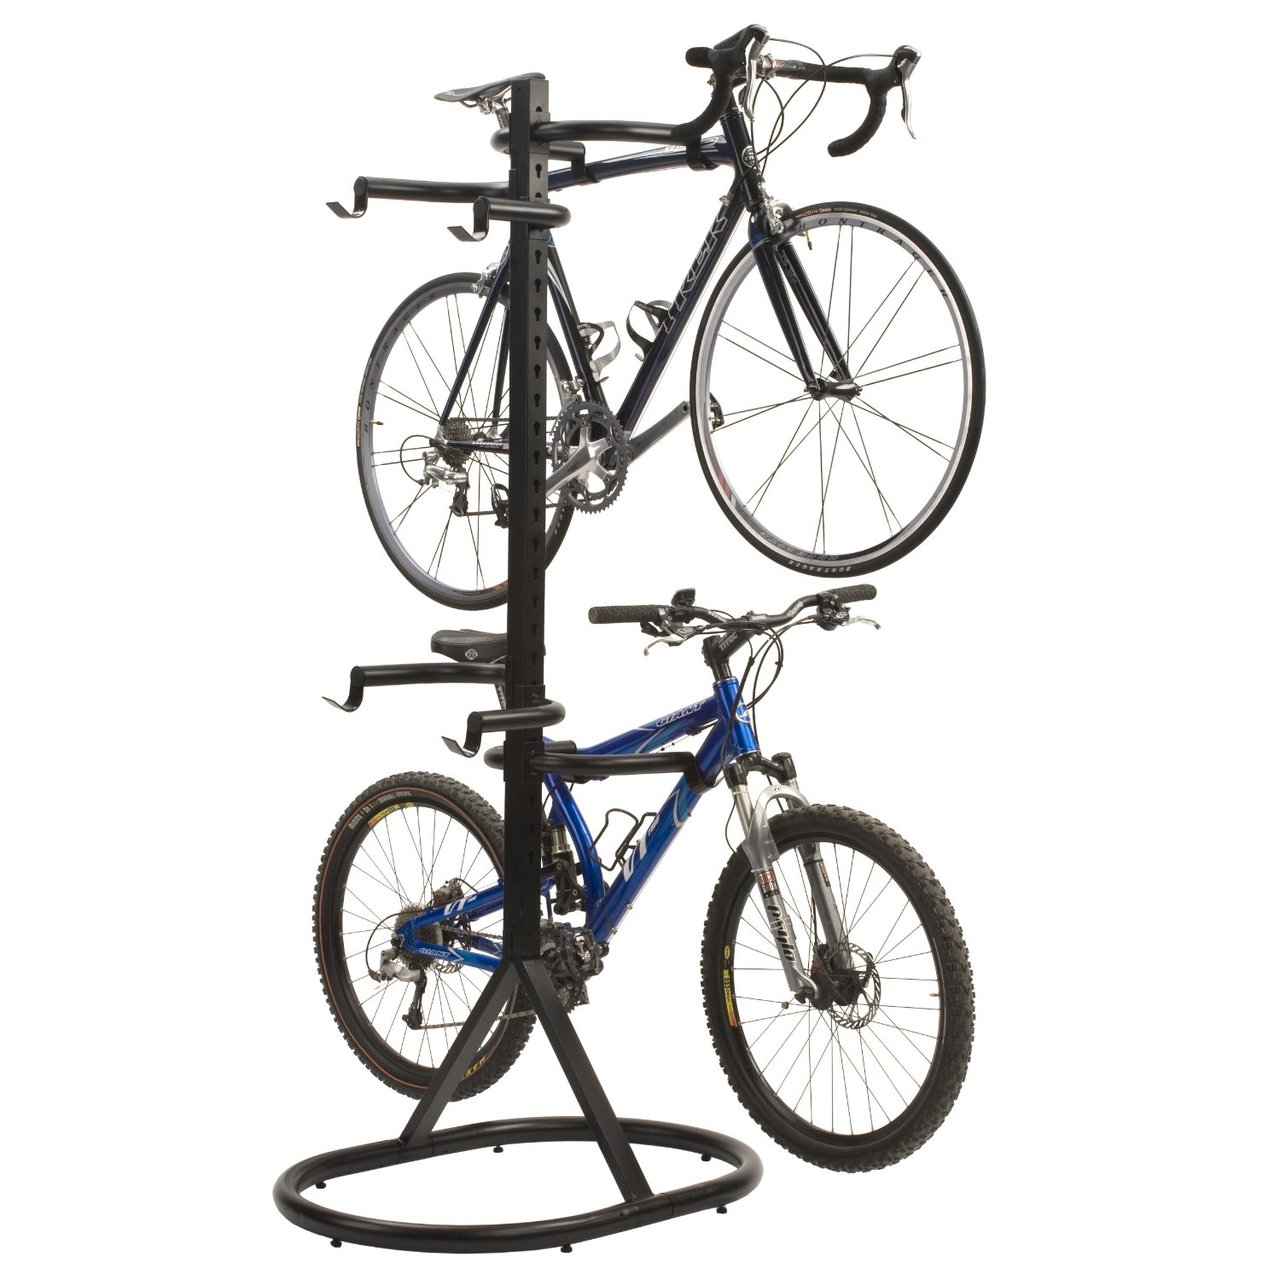 standing bike rack